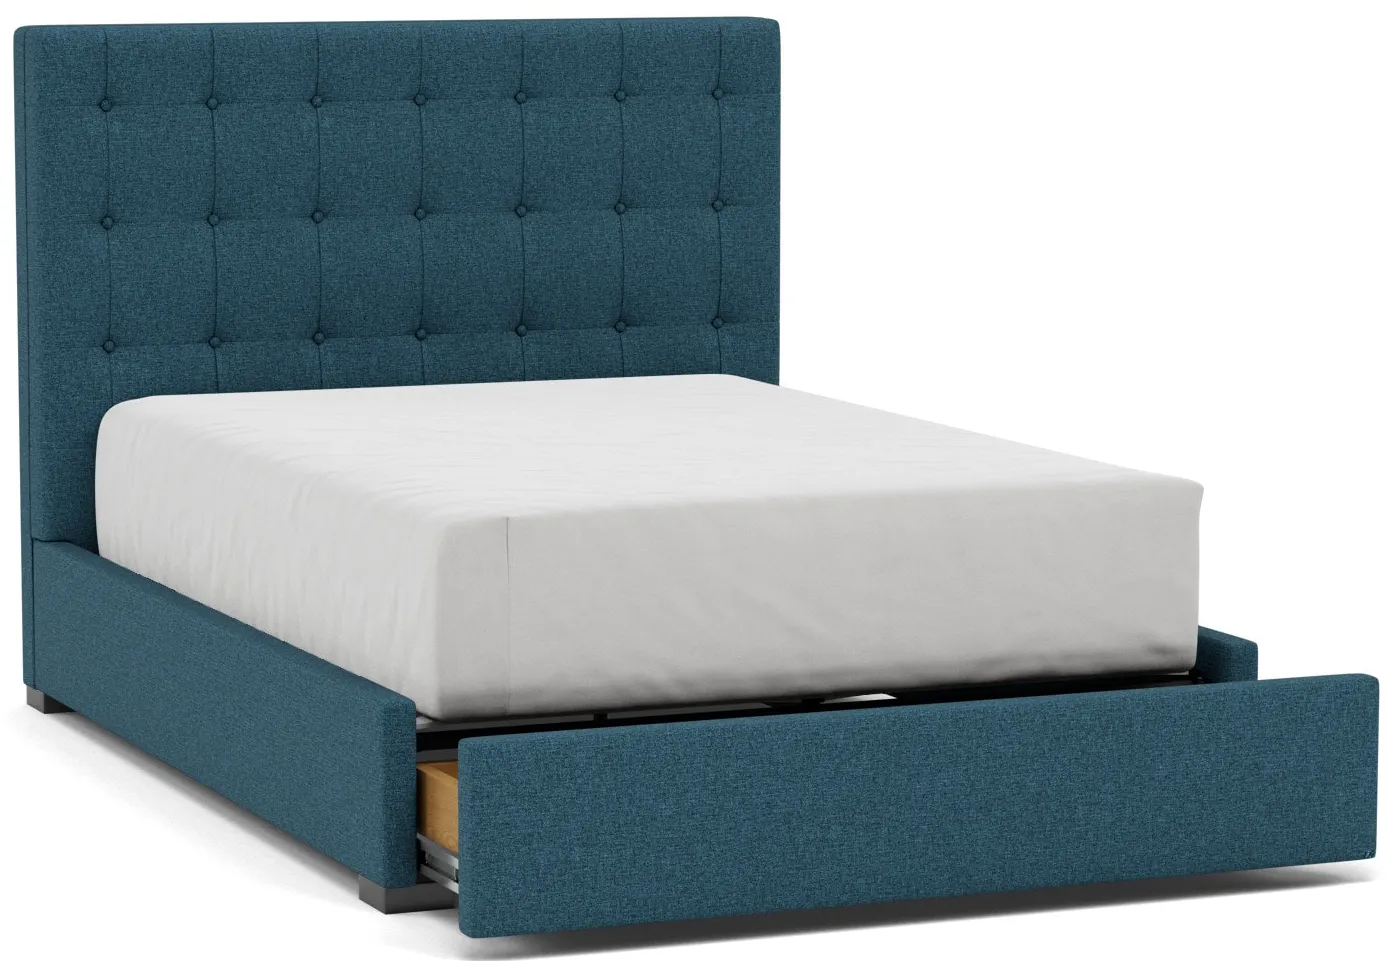 Abby Full Upholstered Storage Bed in Merit Peacock